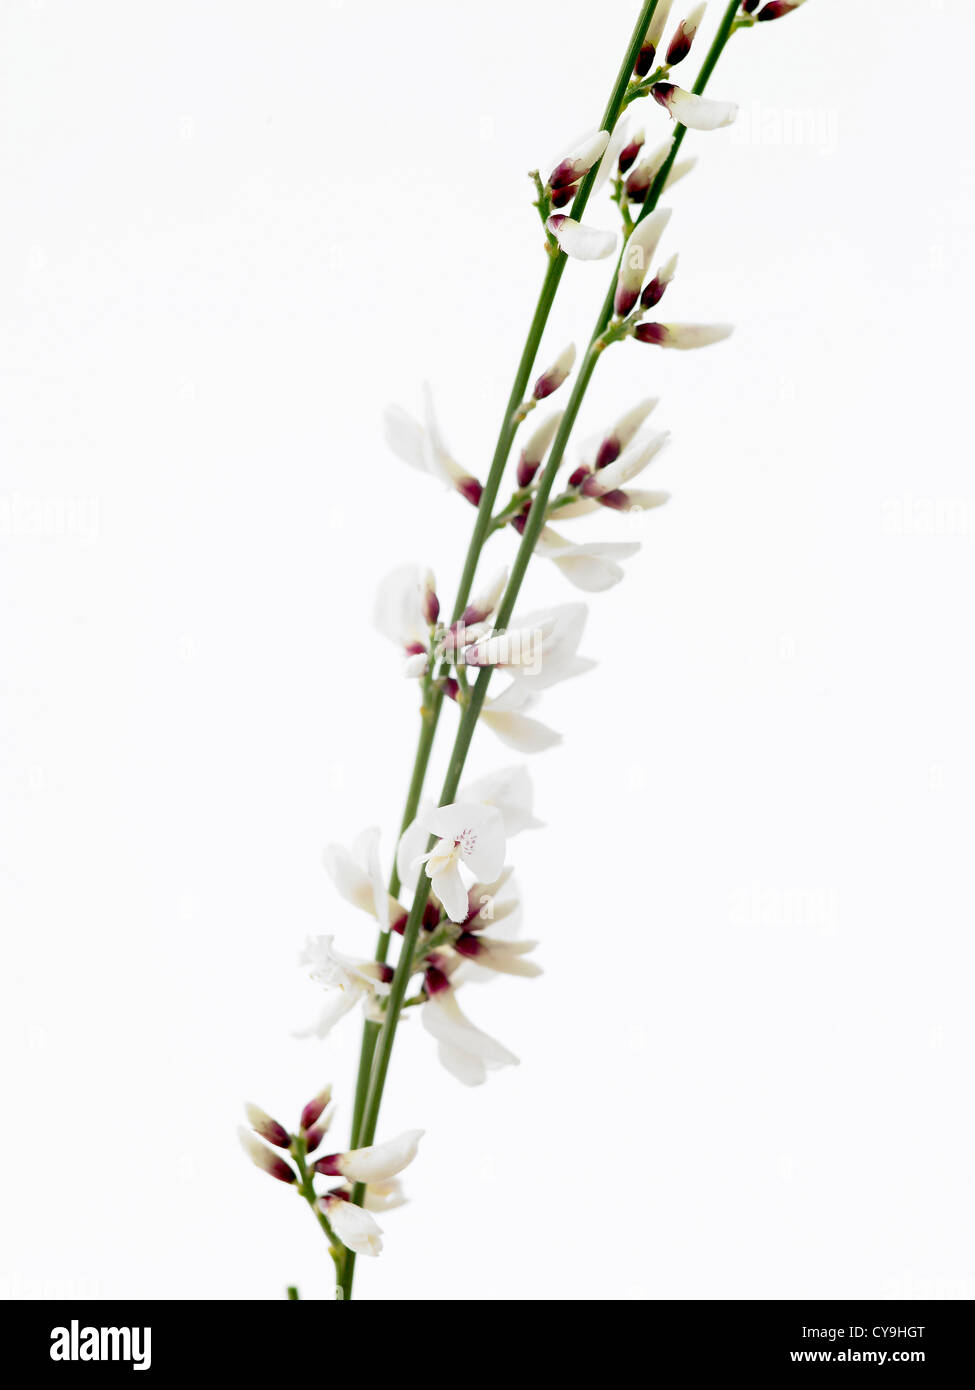 Genista monosperma, White broom flowers on stems against a white background. Stock Photo